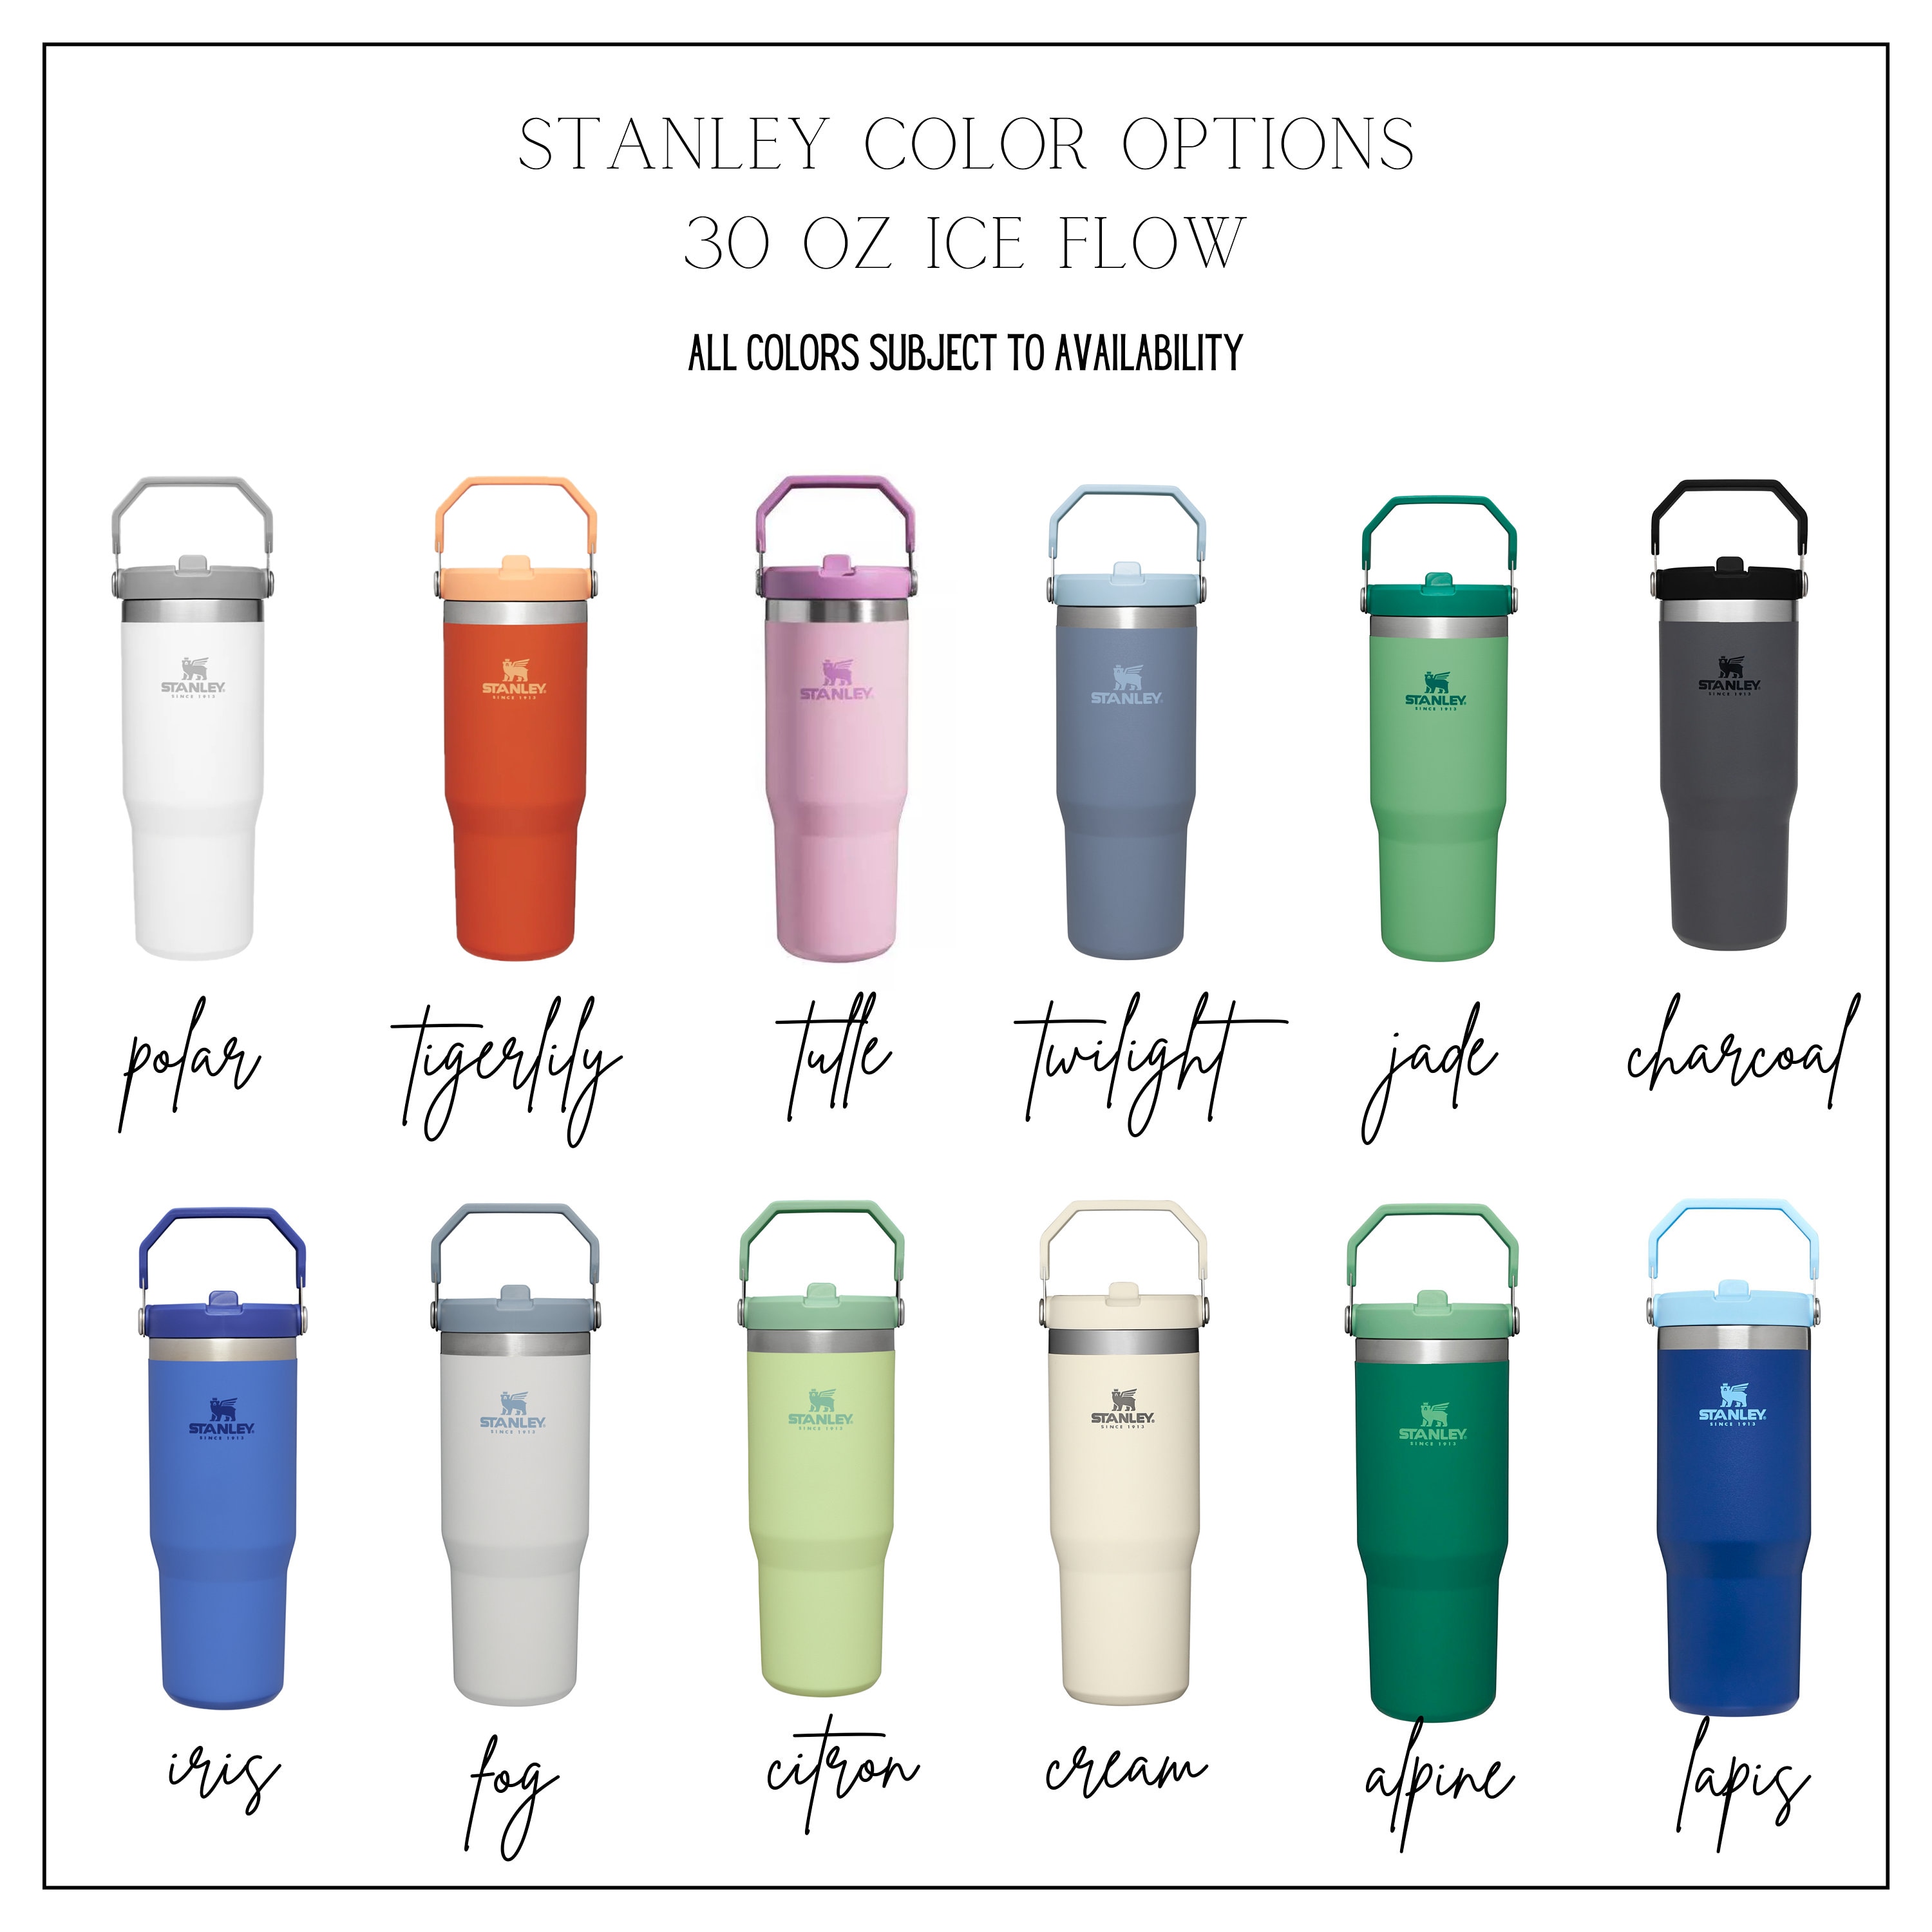 Stanley The IceFlow 30oz Flip Straw Tumbler - Citron Swirl